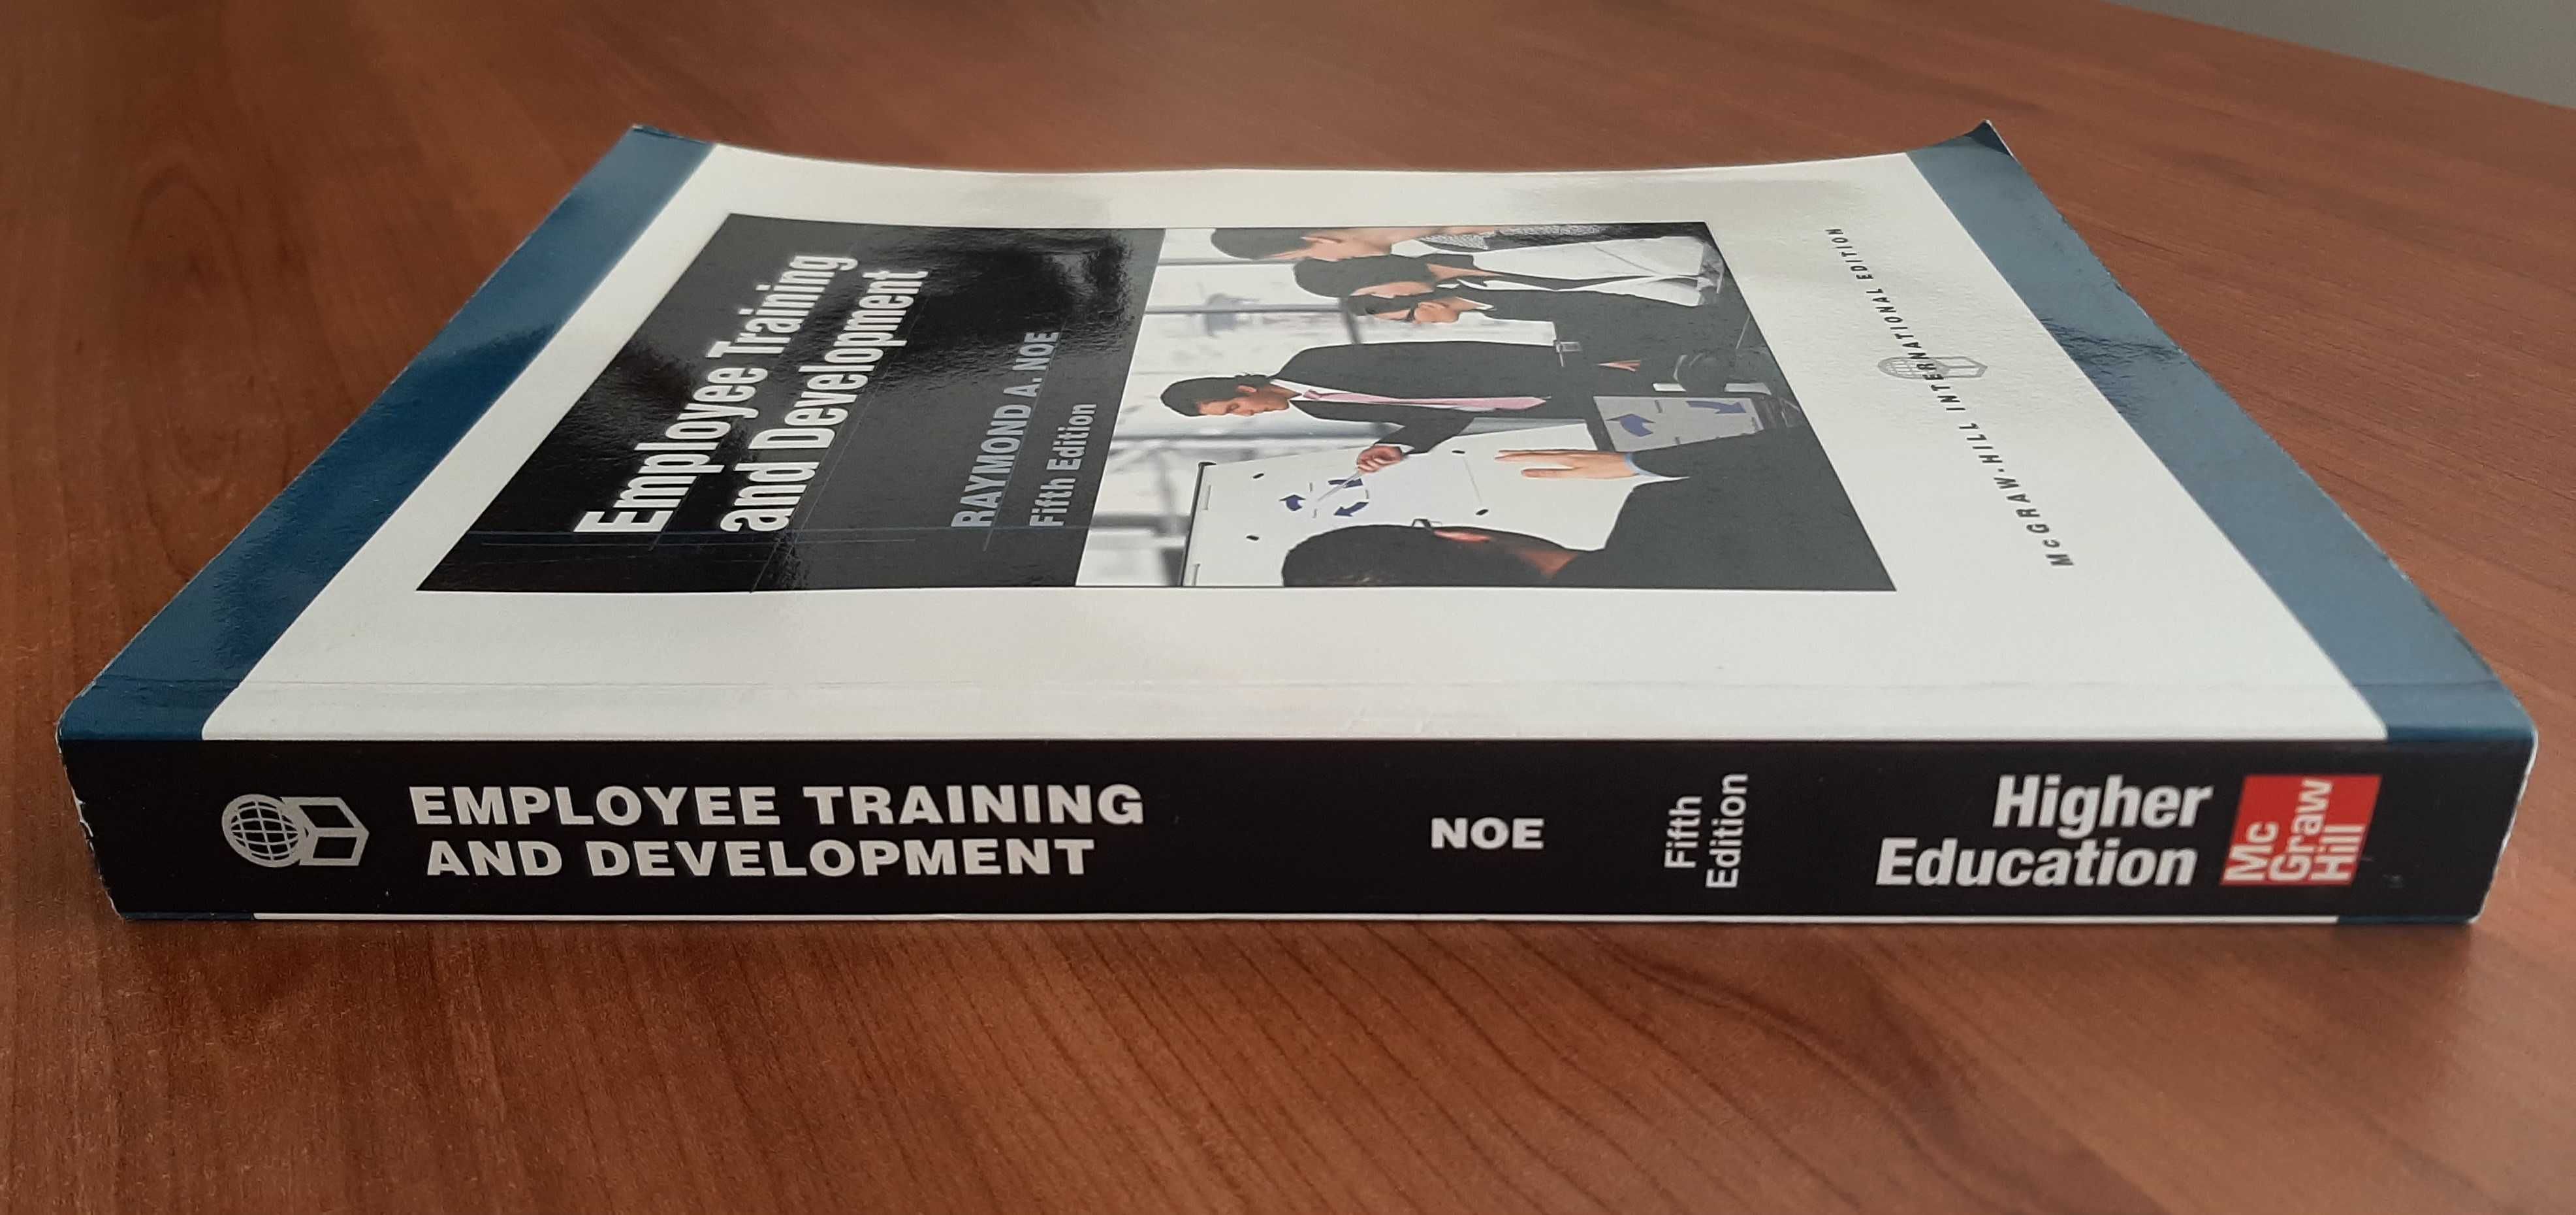 Livro “Employee Training And Development”